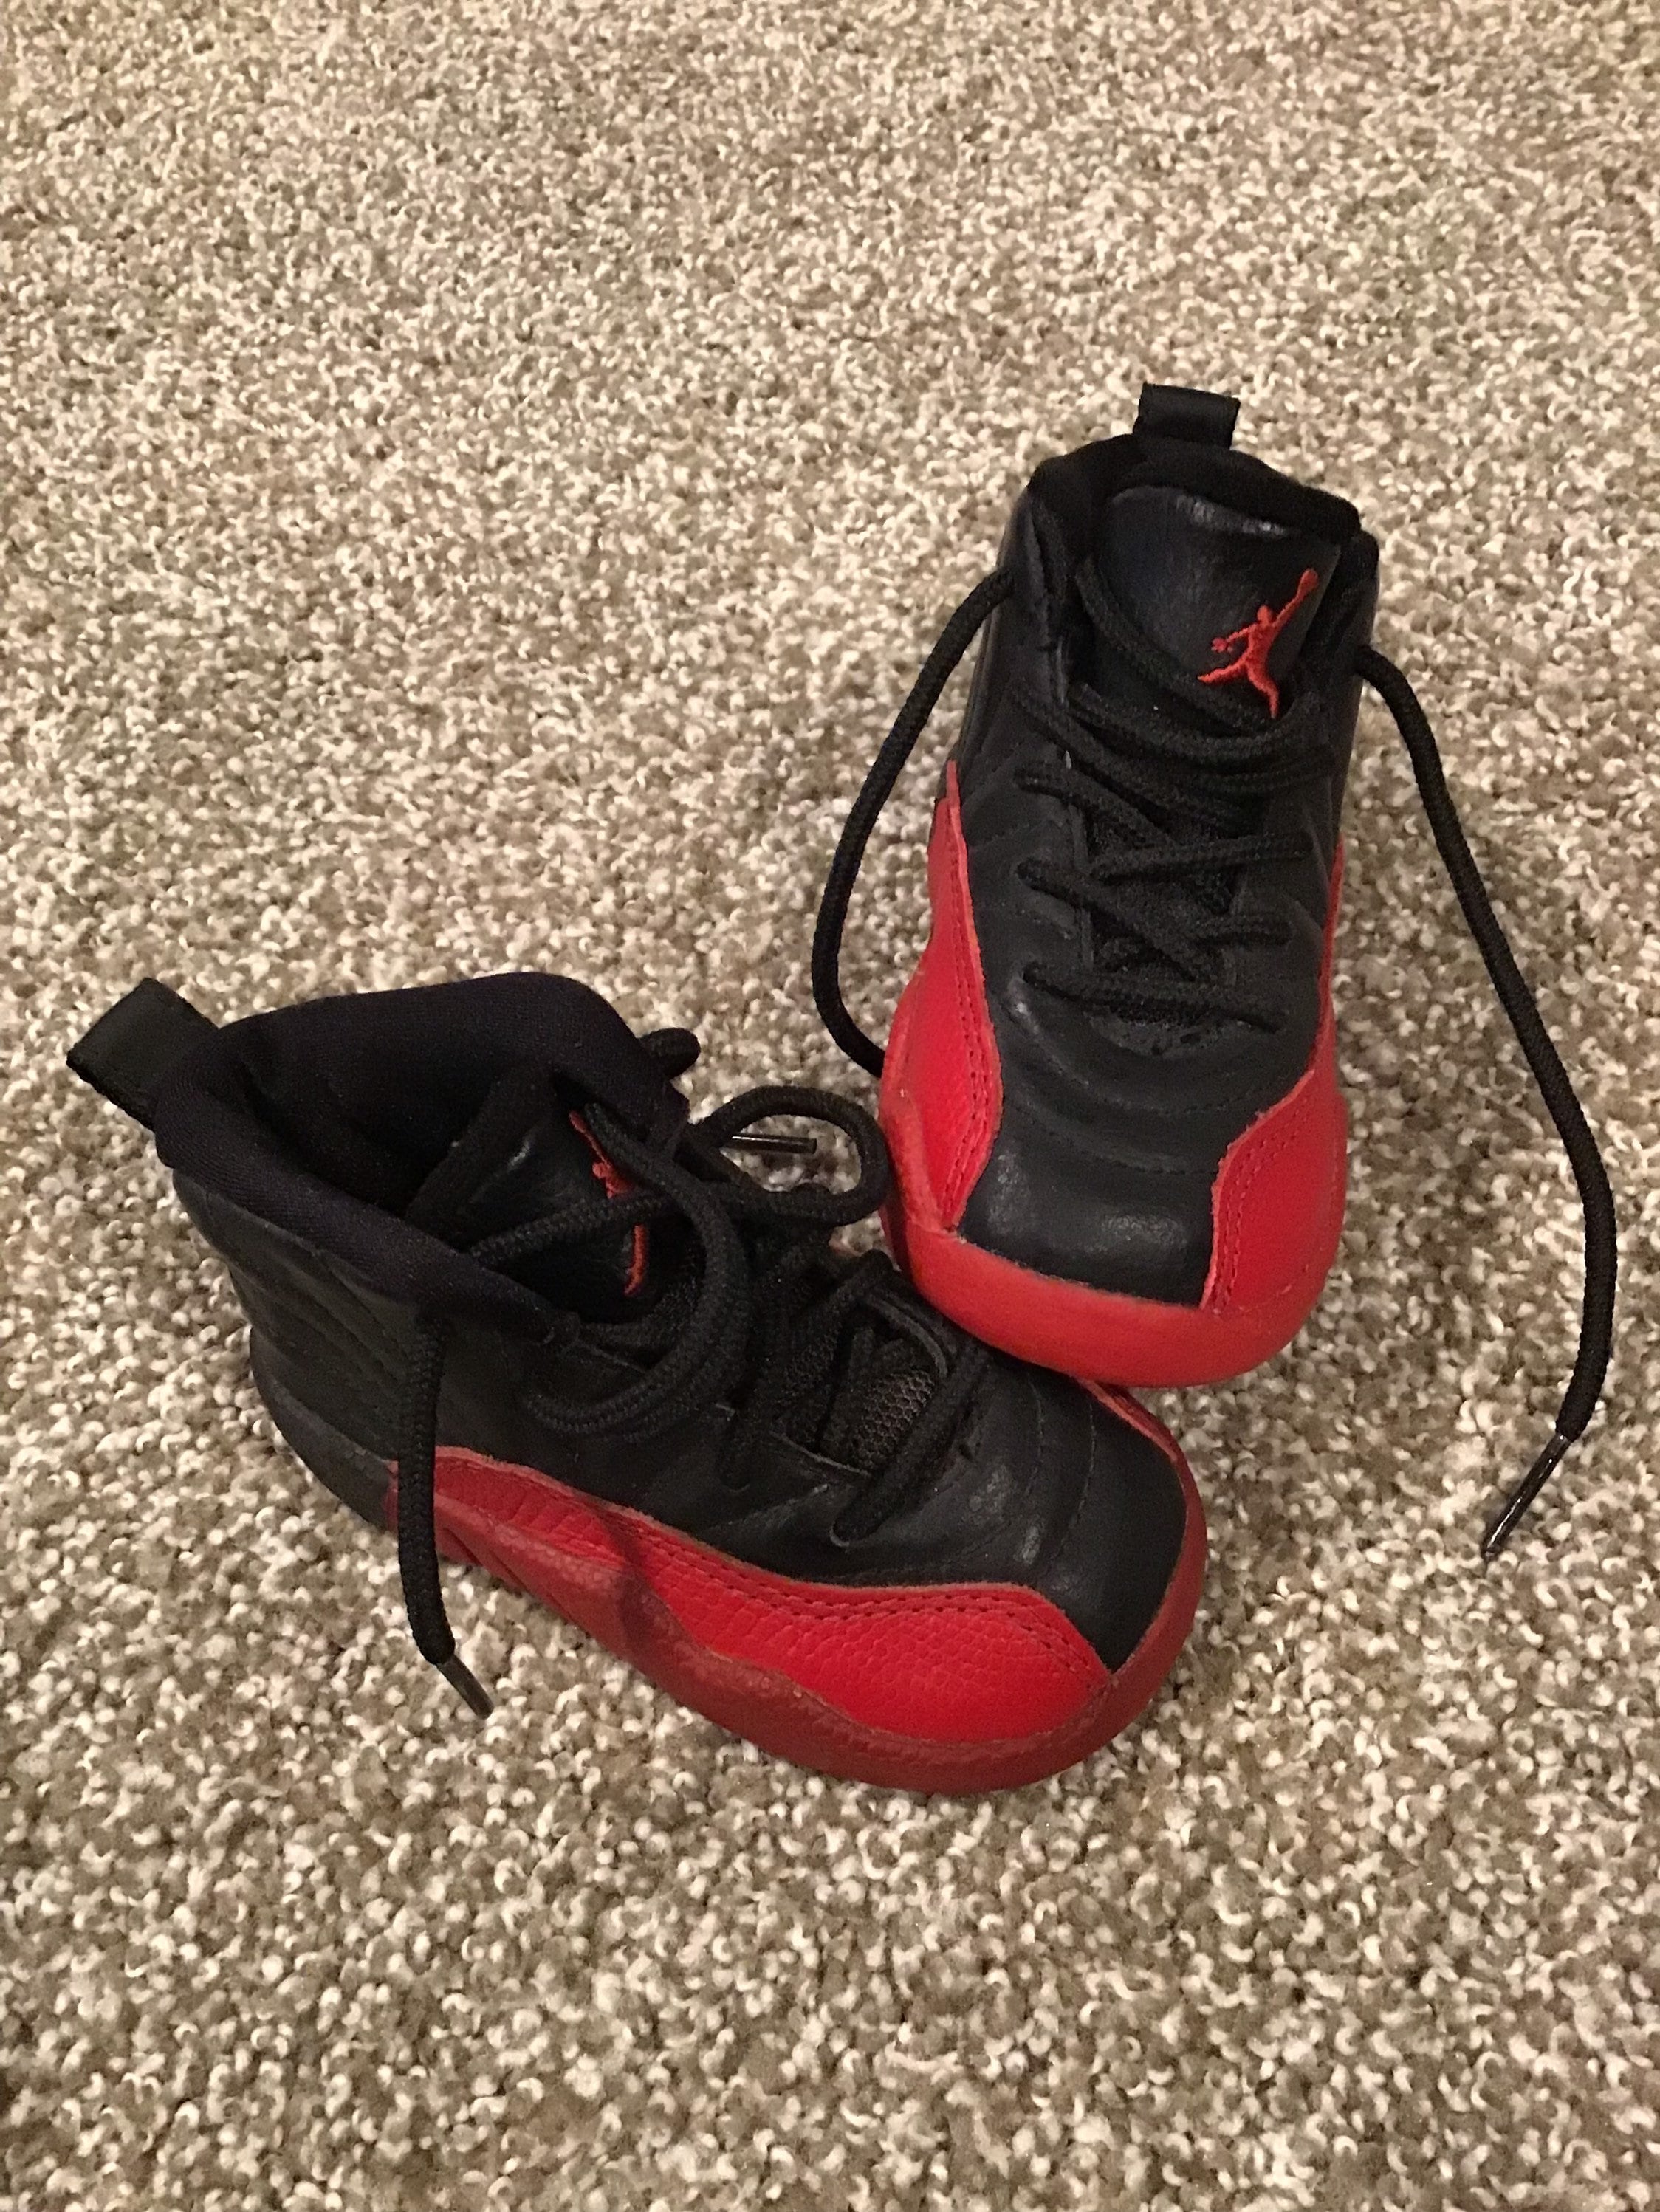 Back, back, back (part born auditorium Chicago Bulls Michael Jordan Nike Retro Baby Shoes Size 4c - Etsy